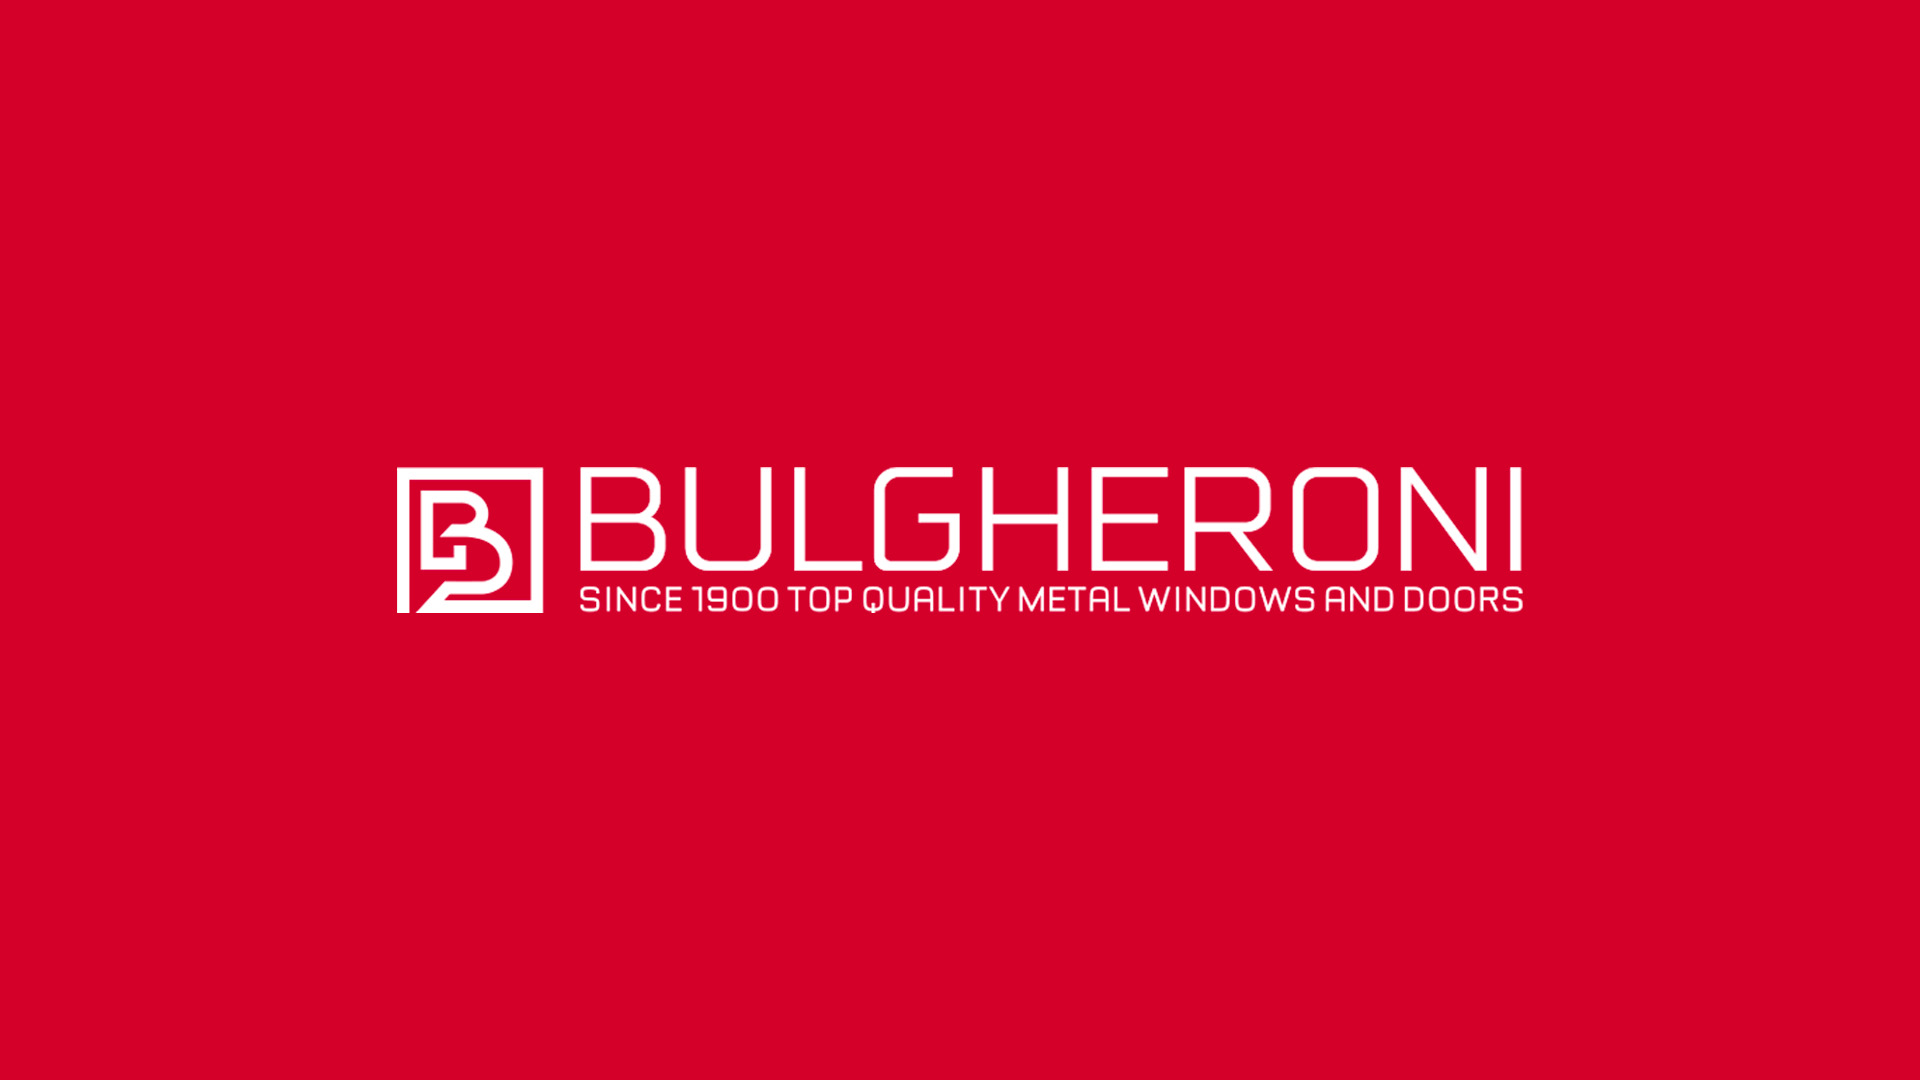 Bulgheroni logo design